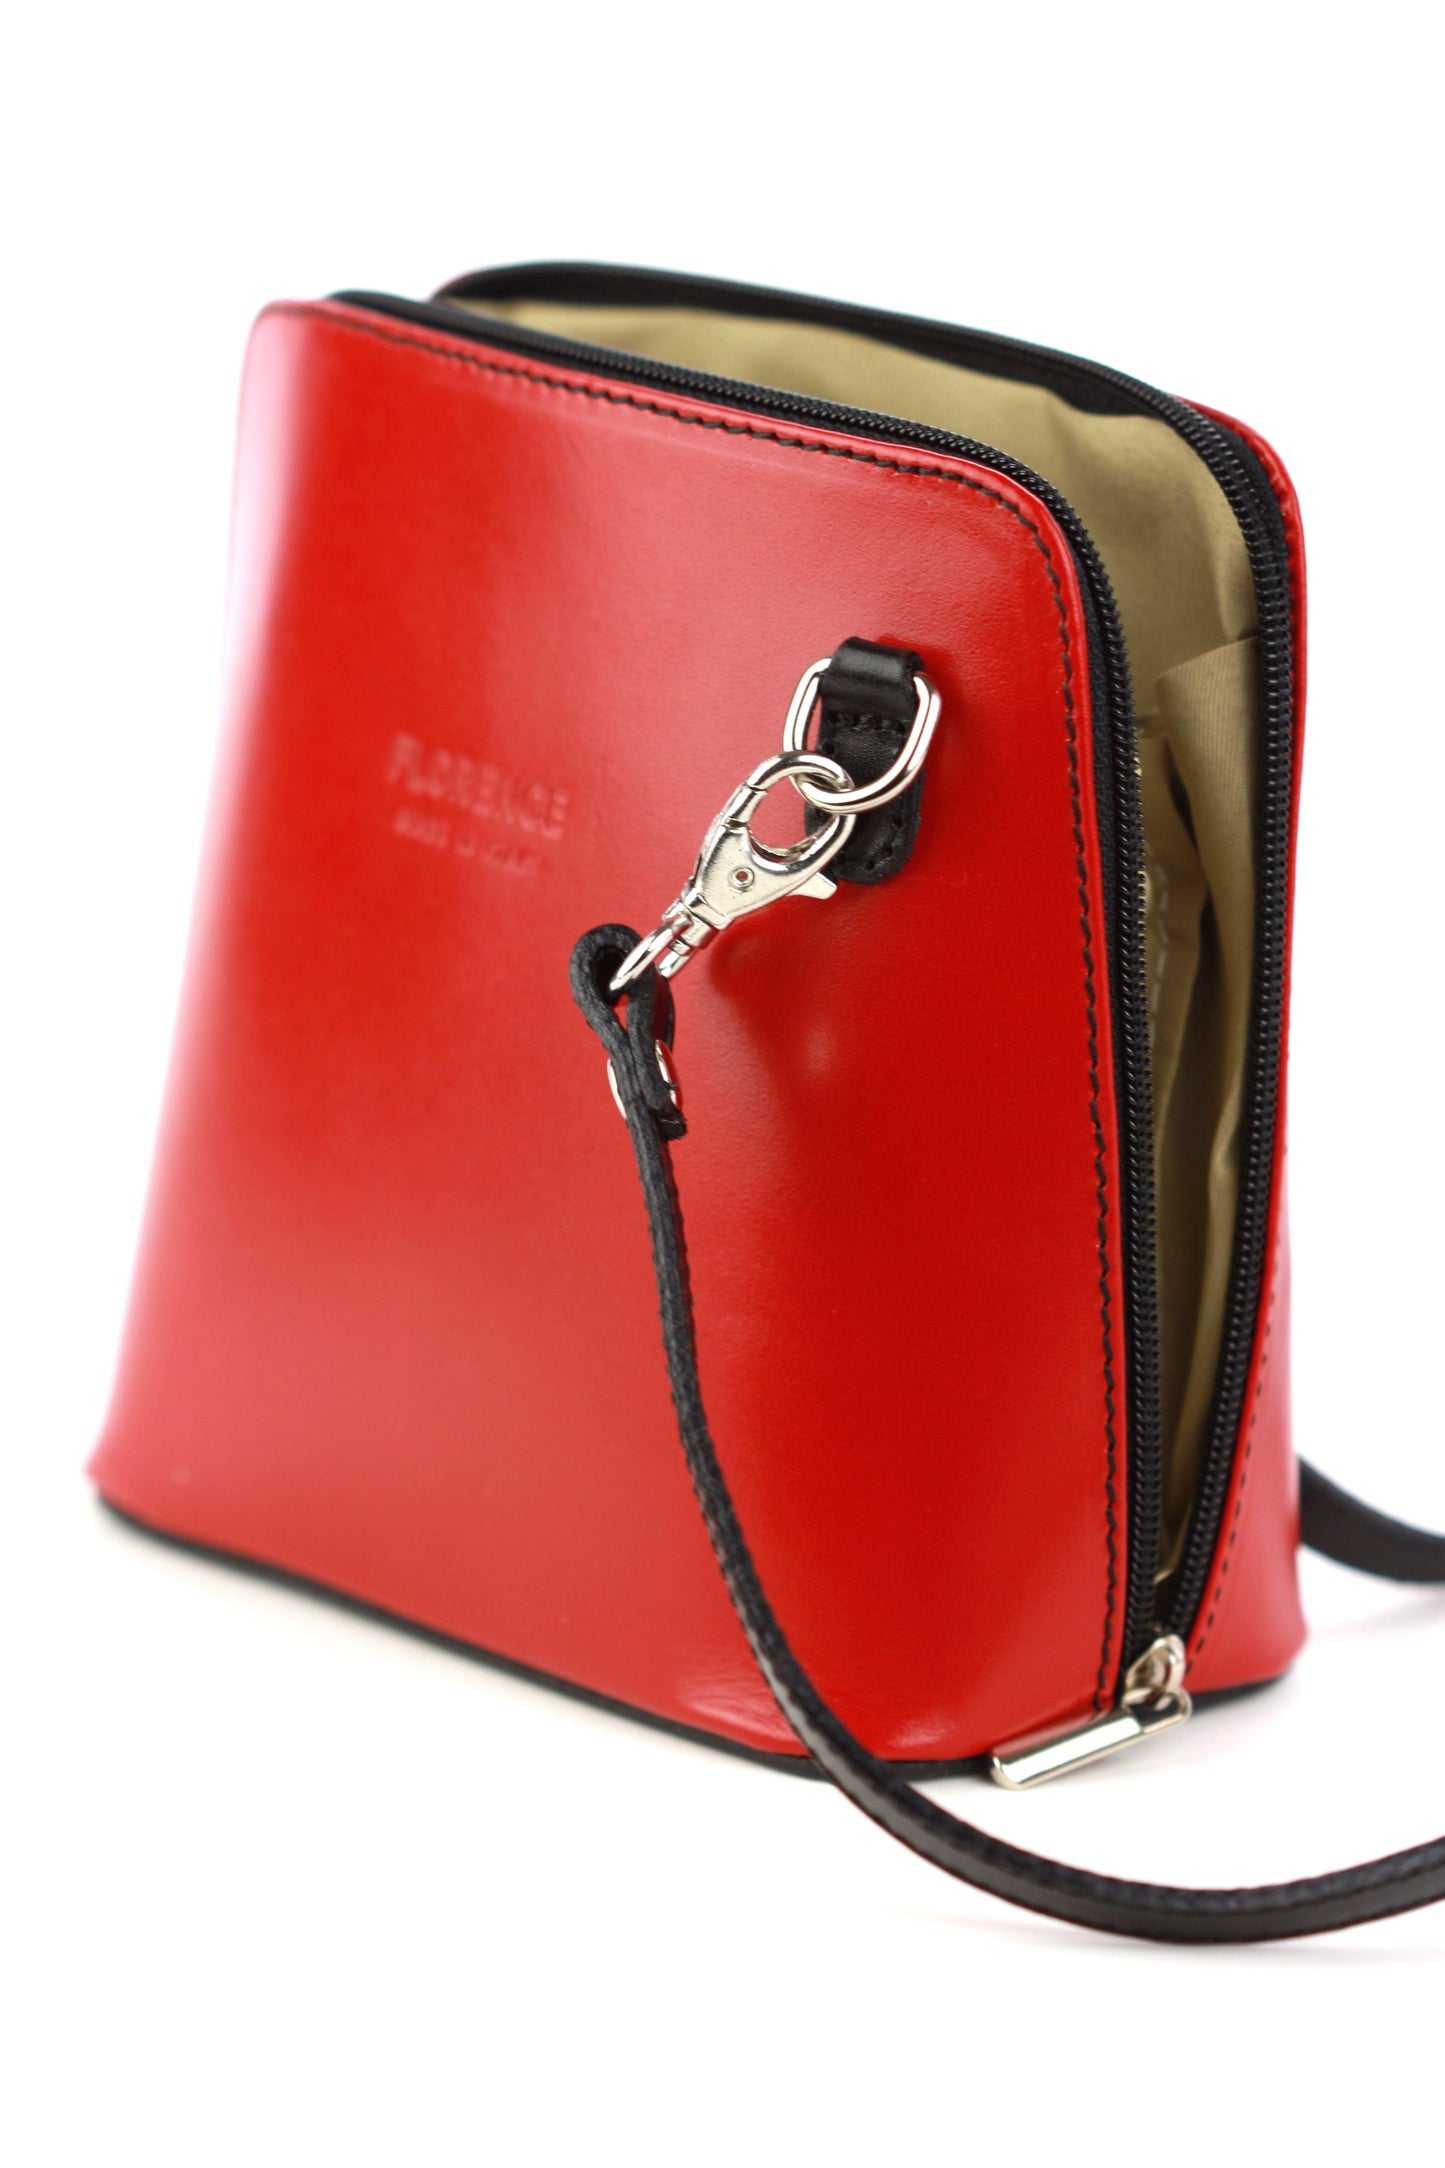 Dalida bag in red with black trim